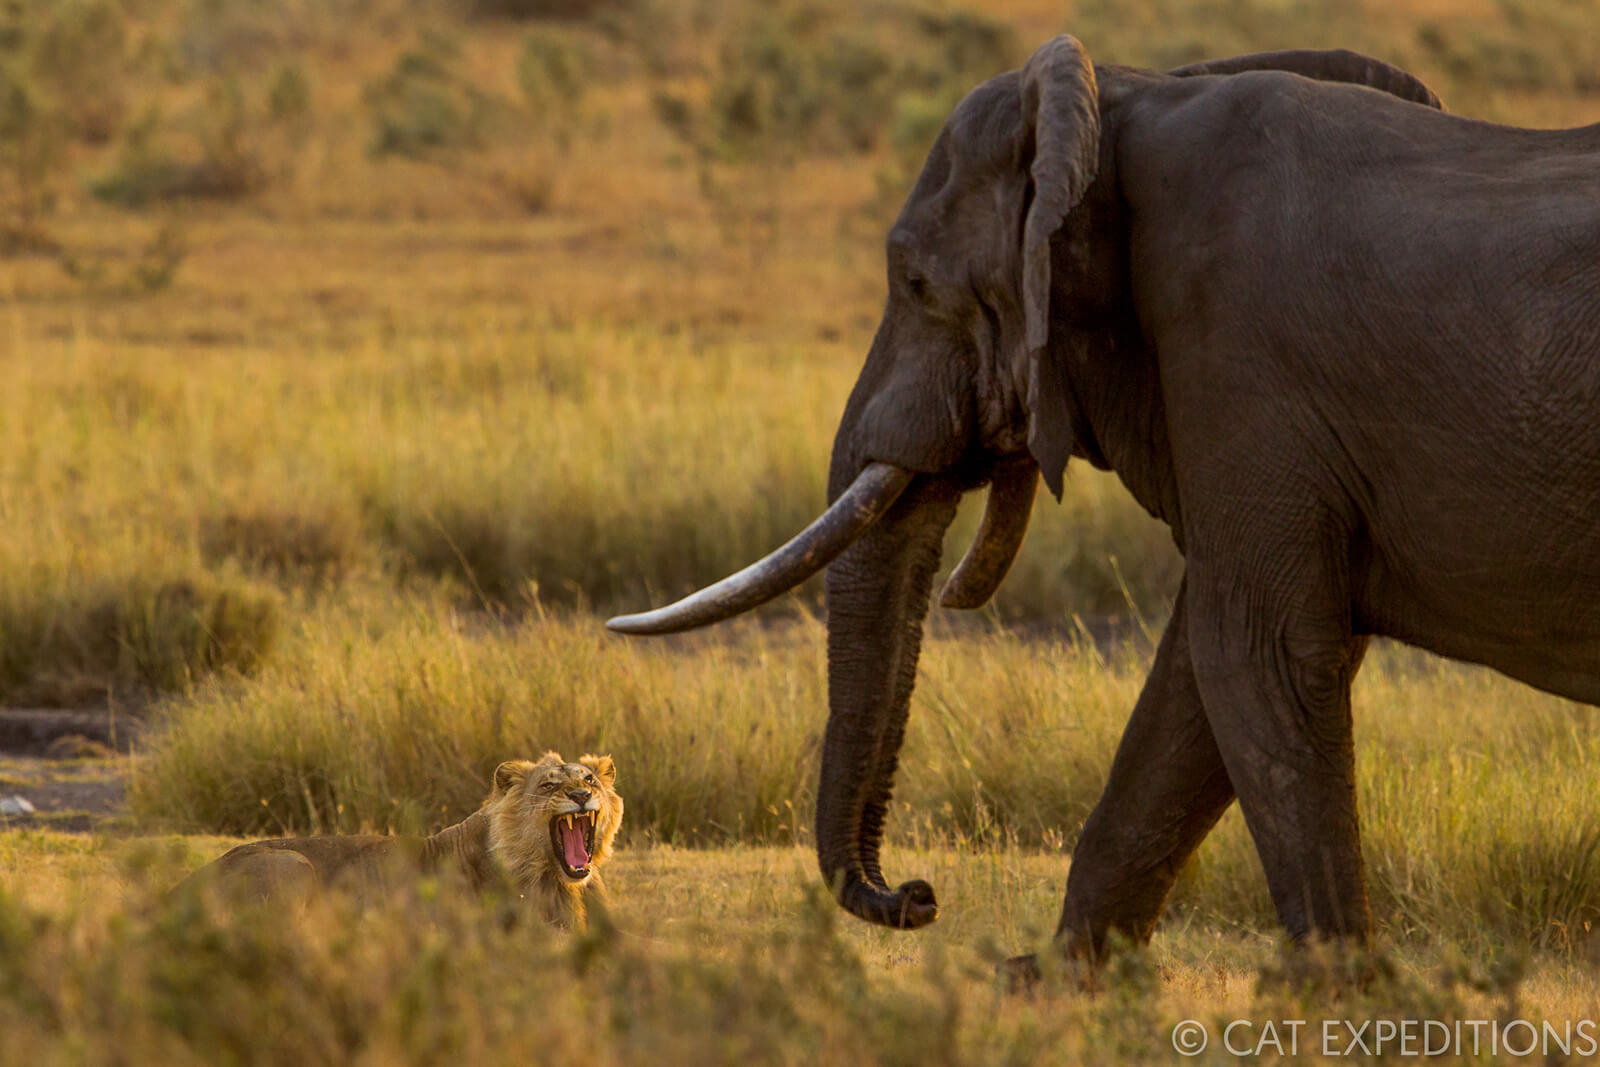 Lion and elephant confrontation